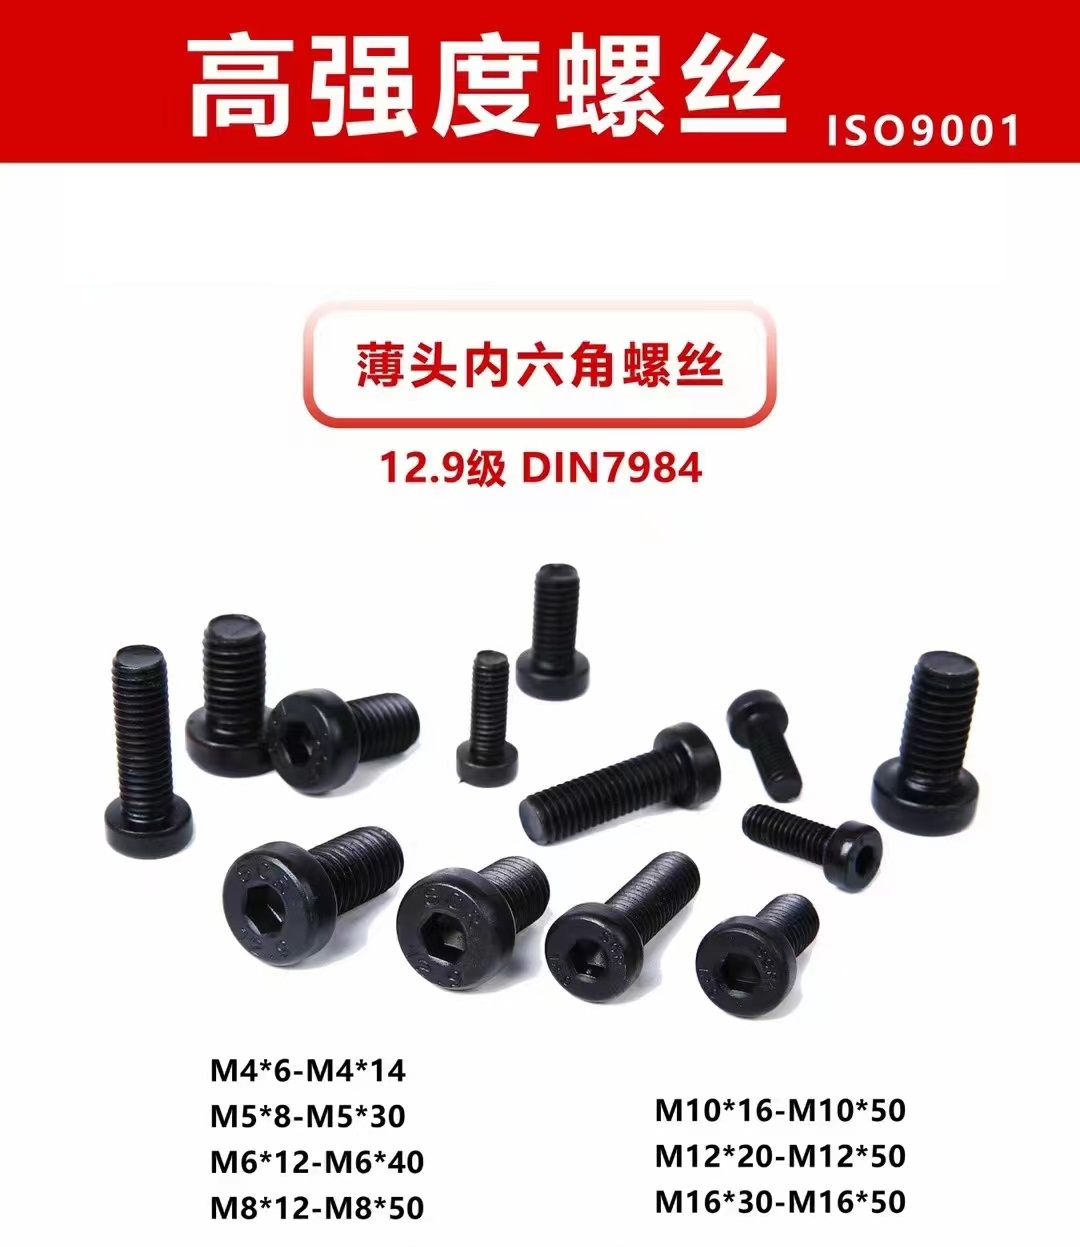 DIN7984 hex socket head cap screw with low head 